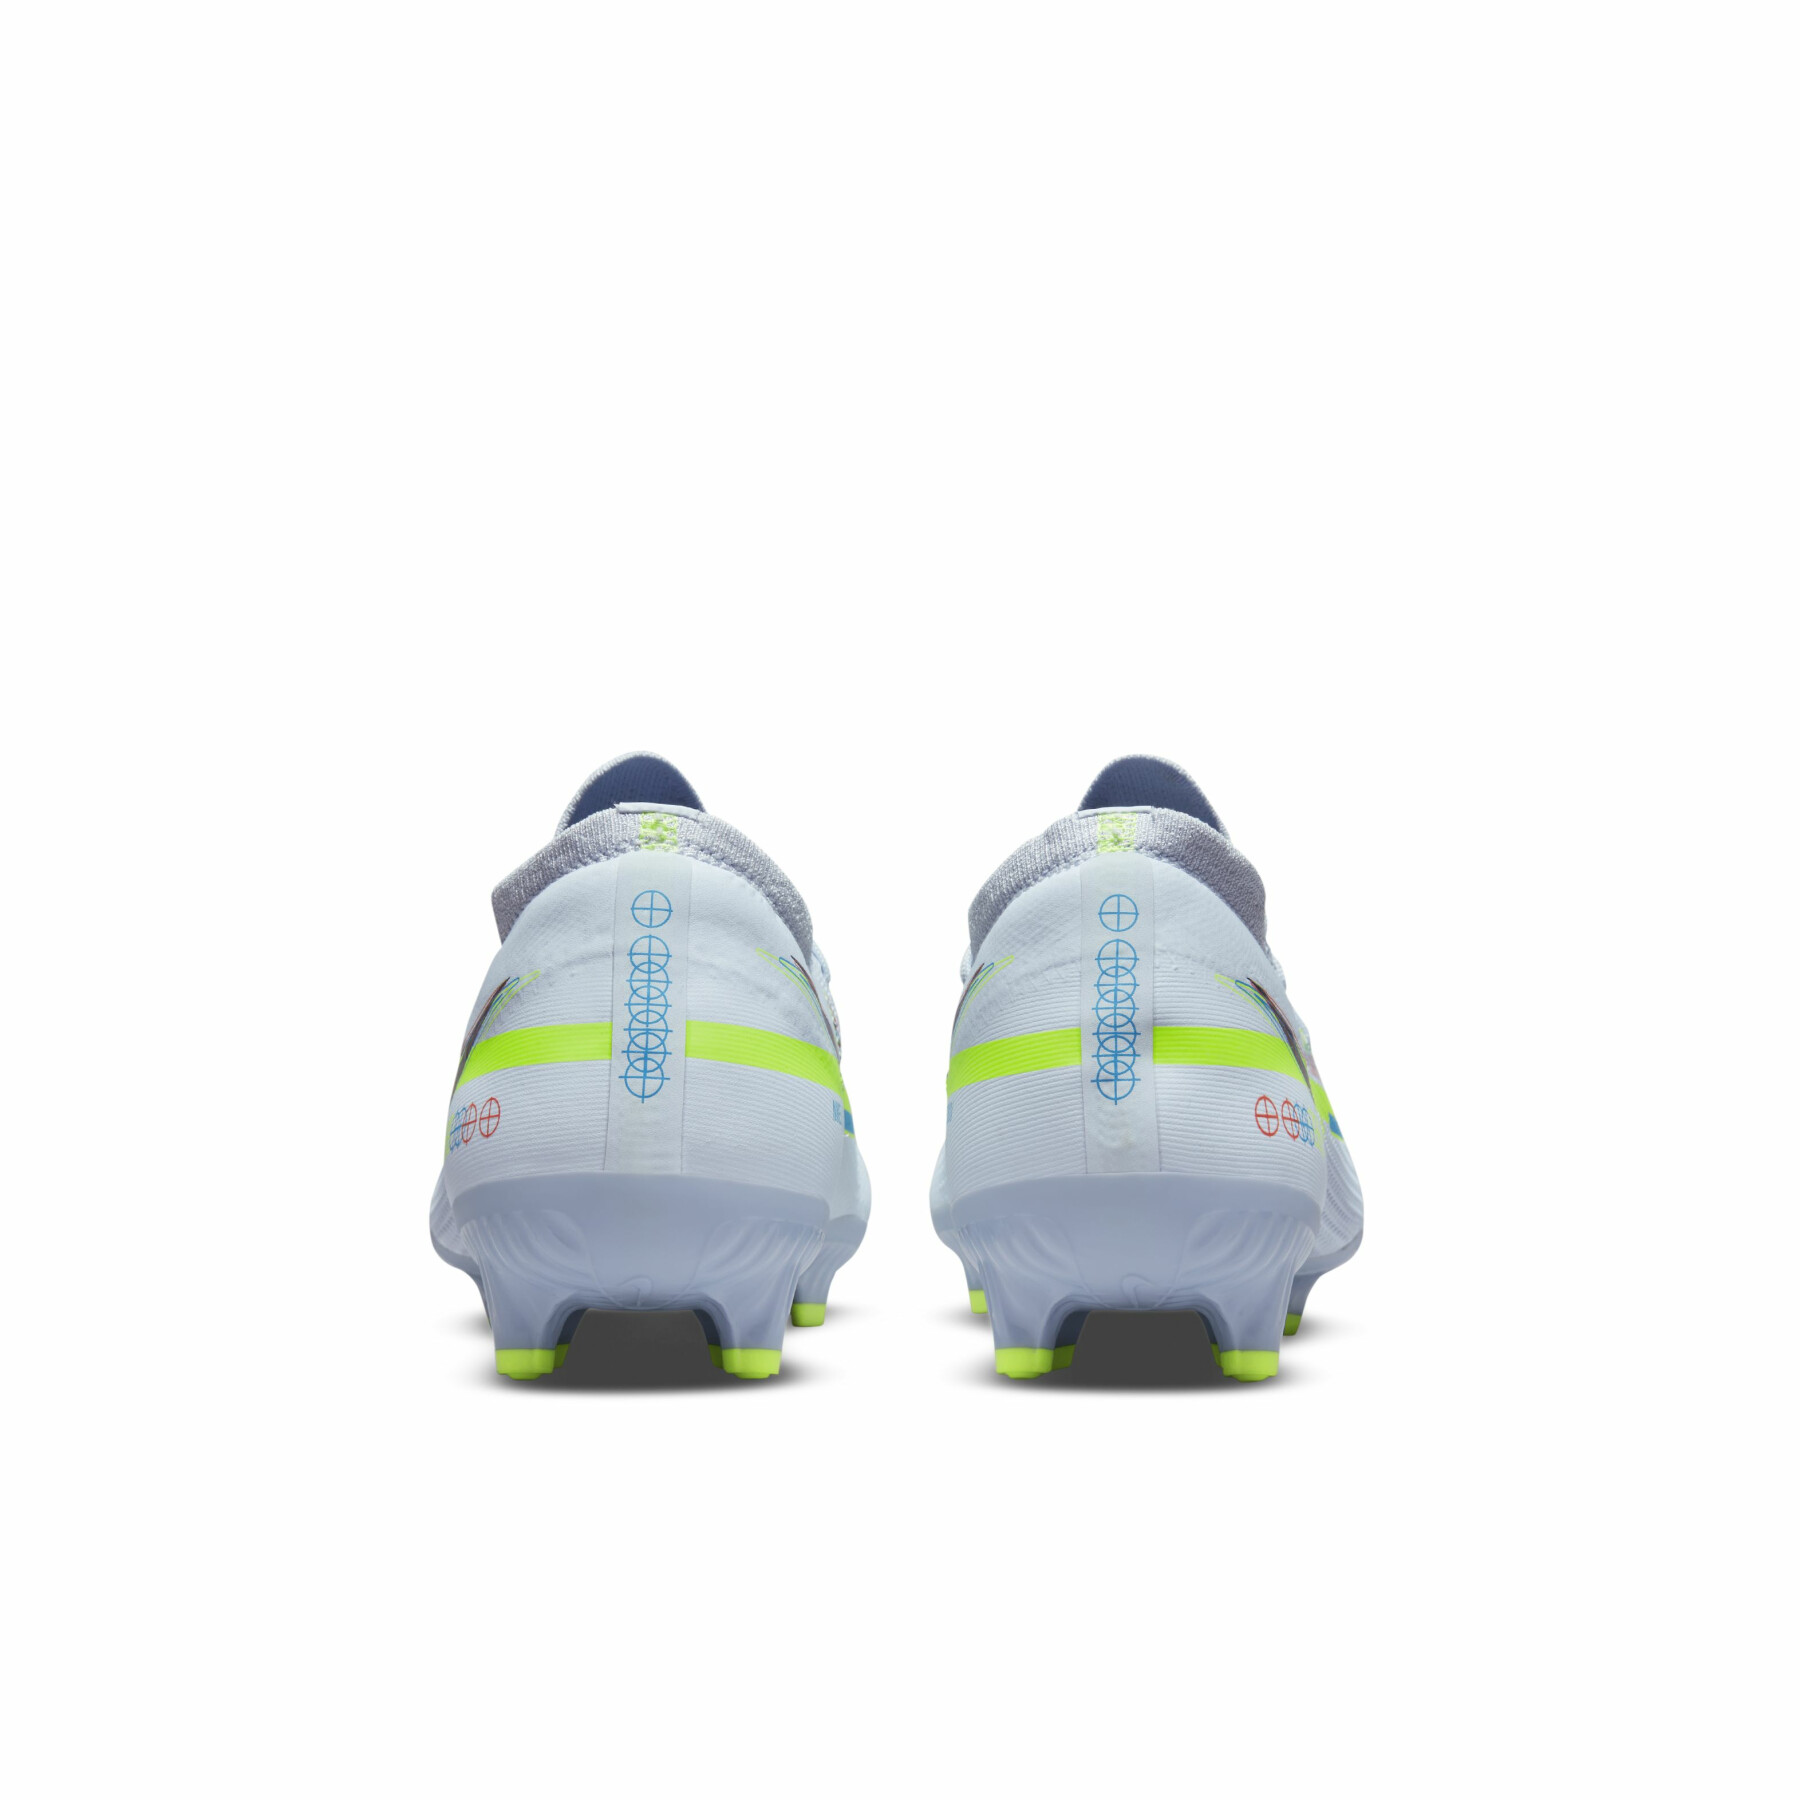 Soccer shoes Nike Phantom Gt2 Pro FG